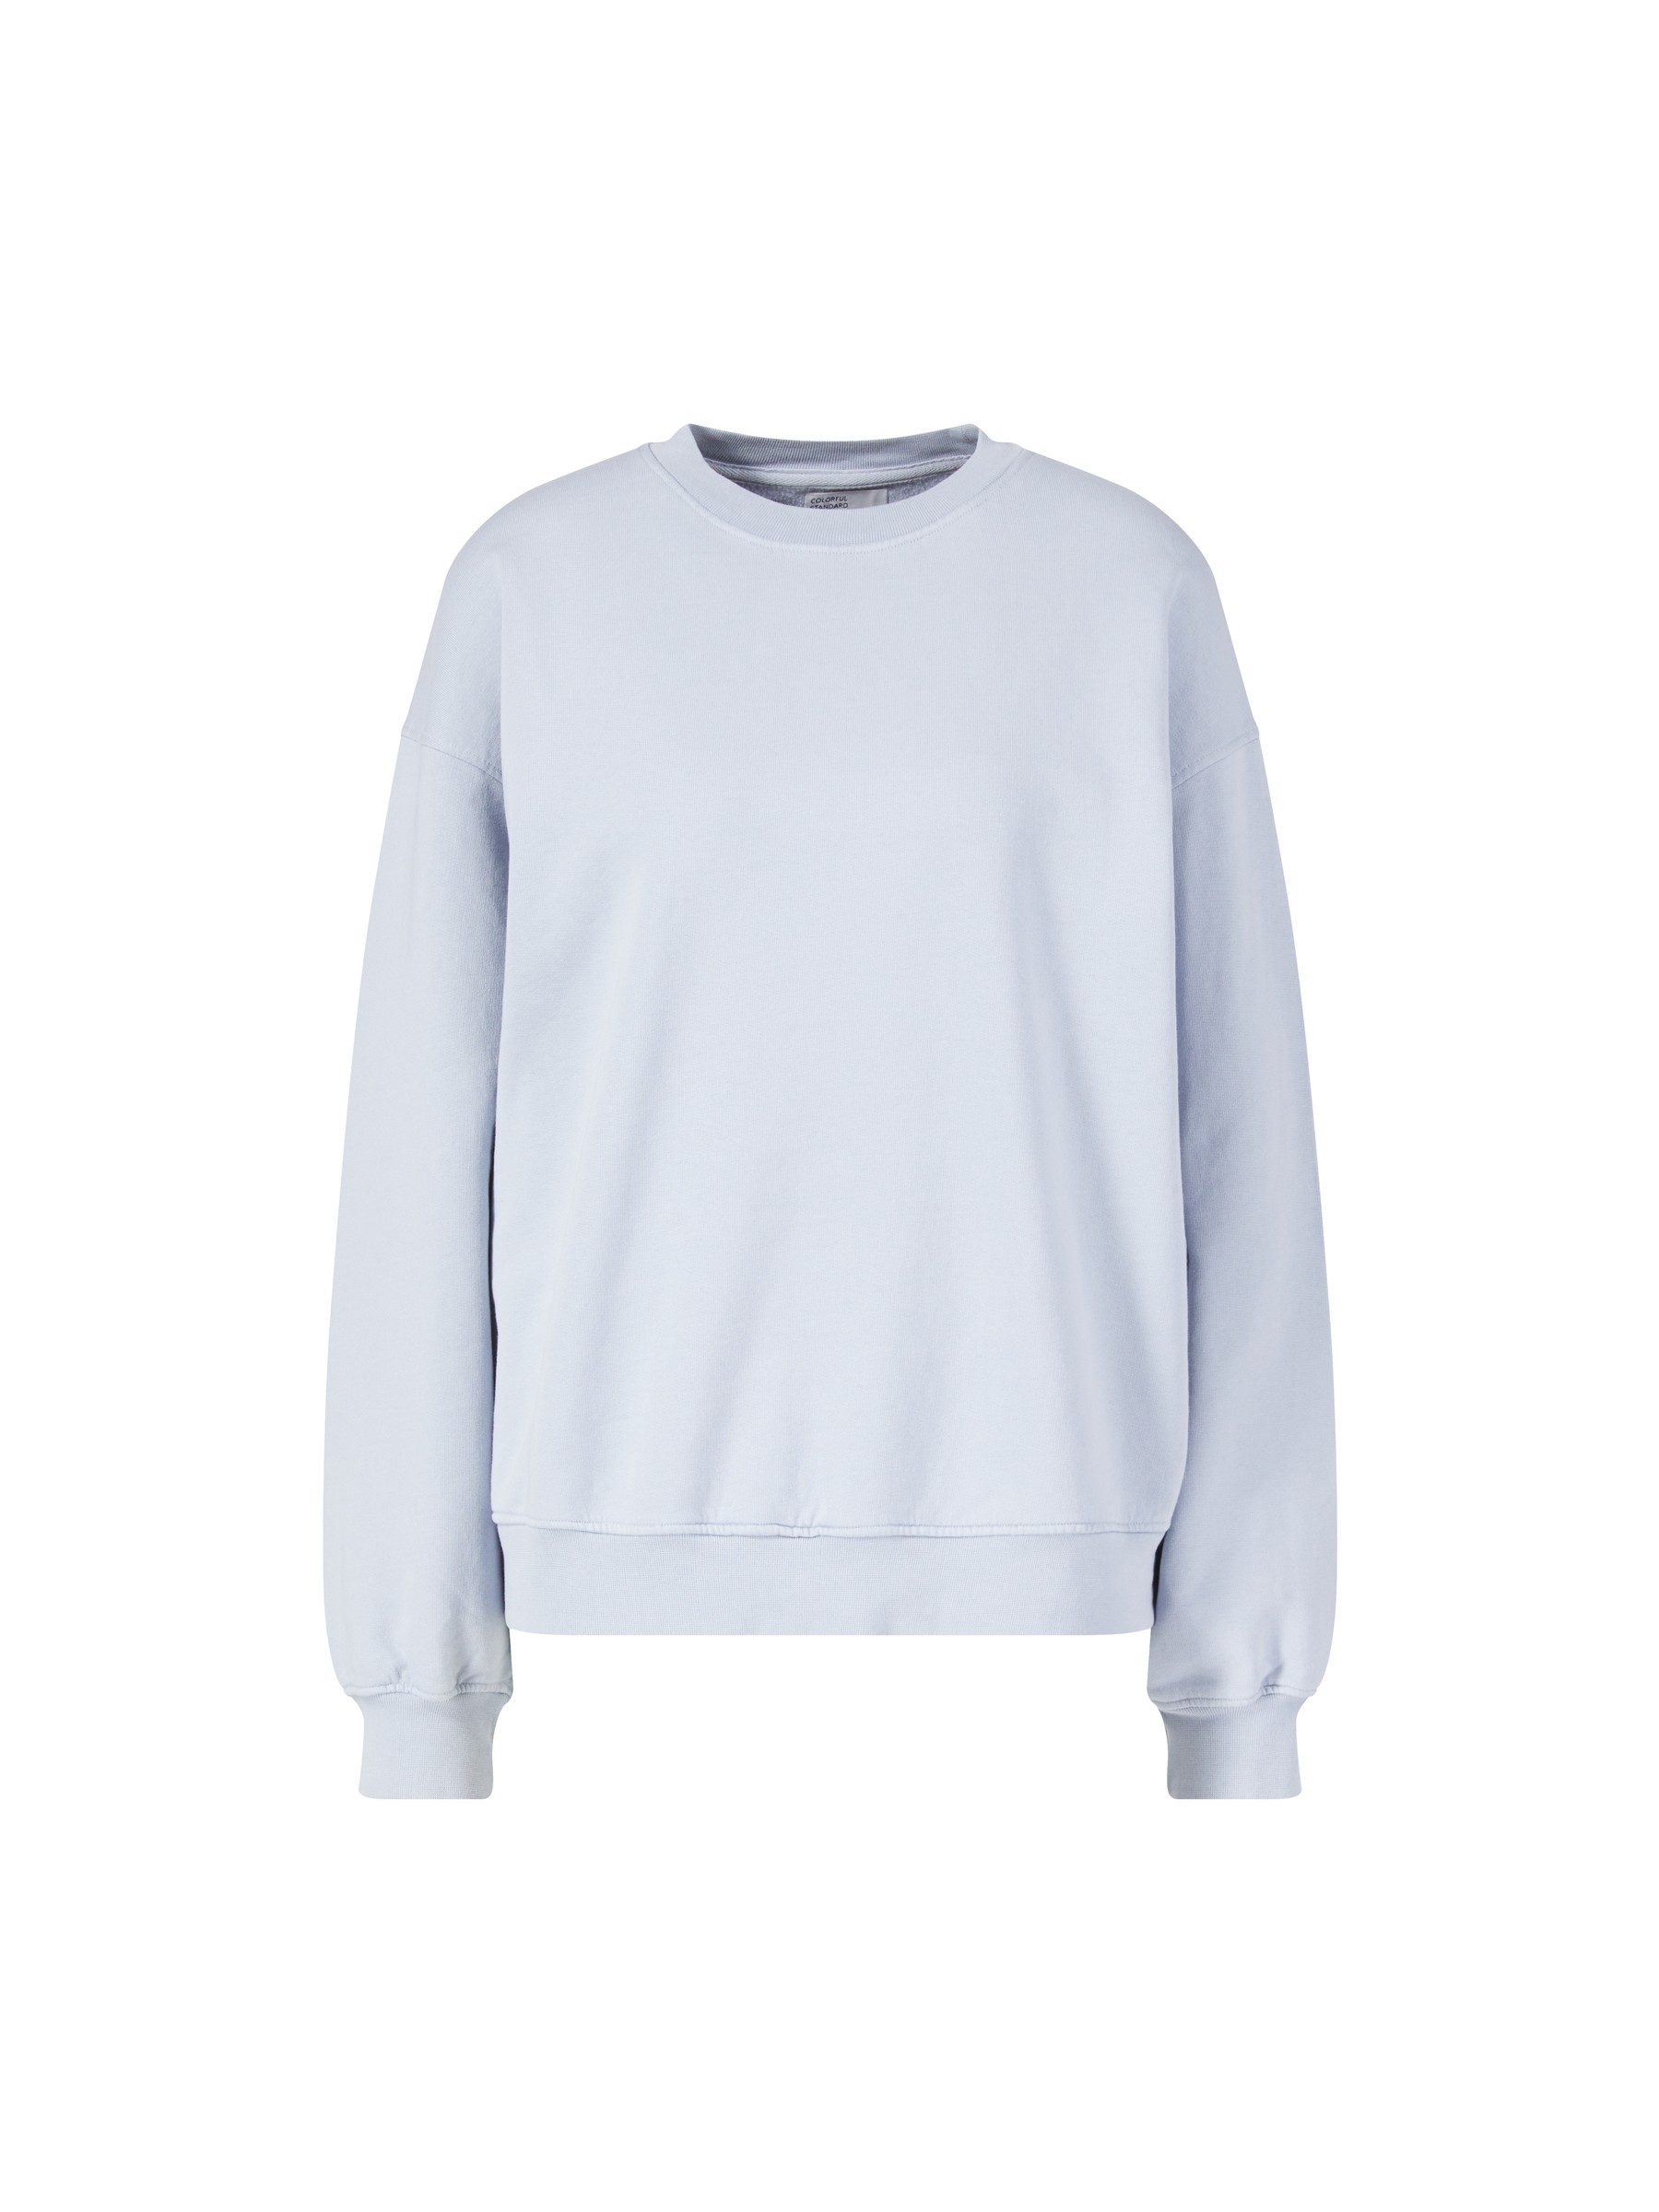 Colorful Standard | Sweatshirts Baumwoll-Sweatshirt Hellblau